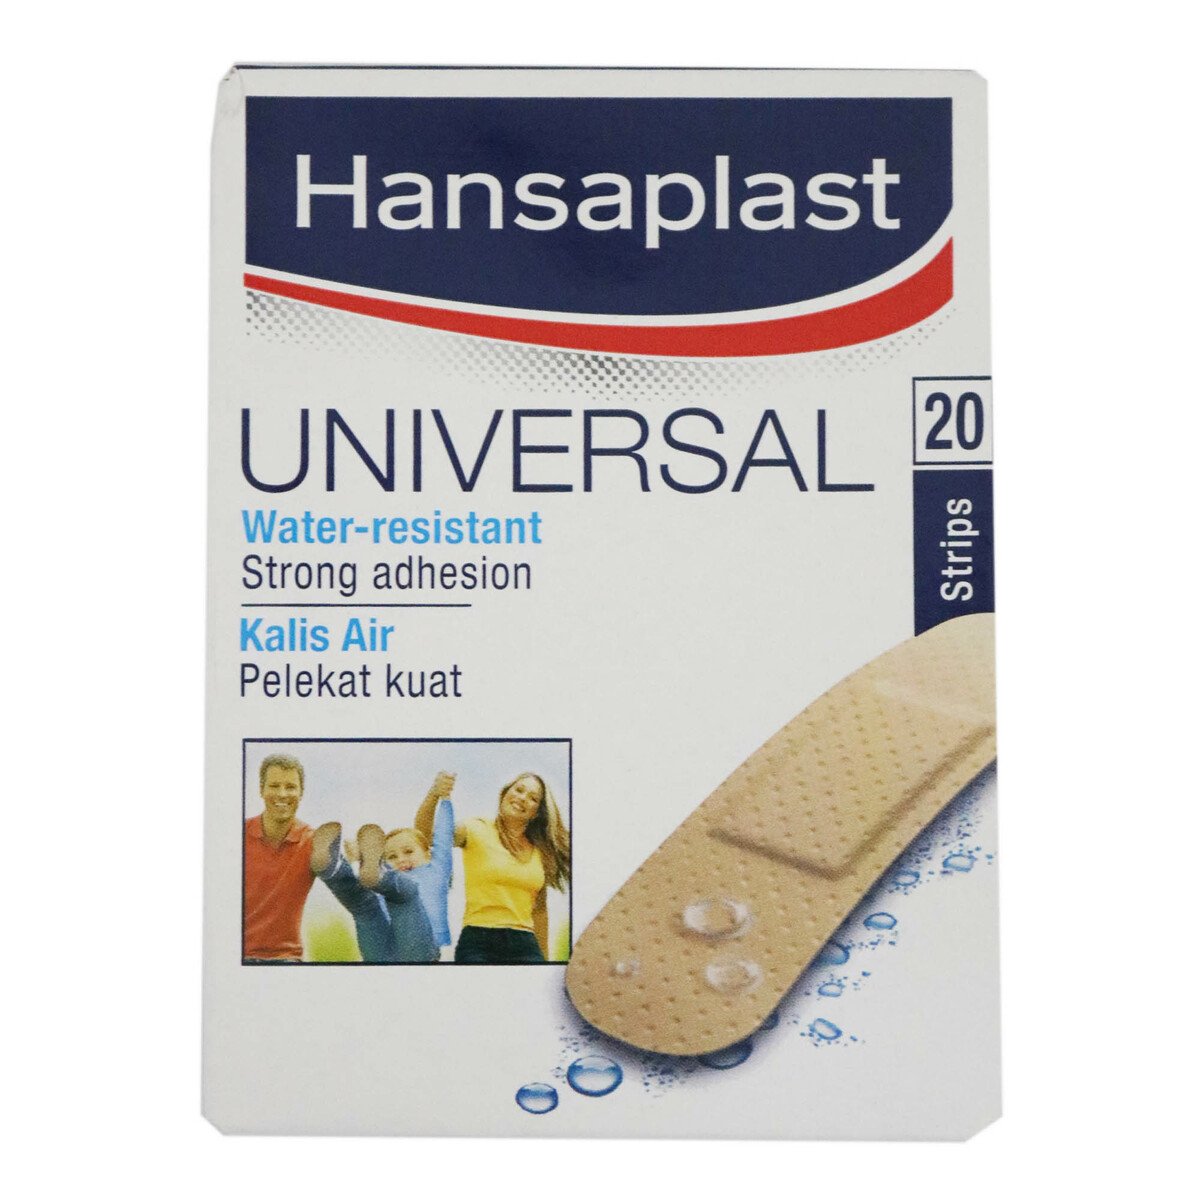 Hansaplast Universal Water Resistant 20pcs